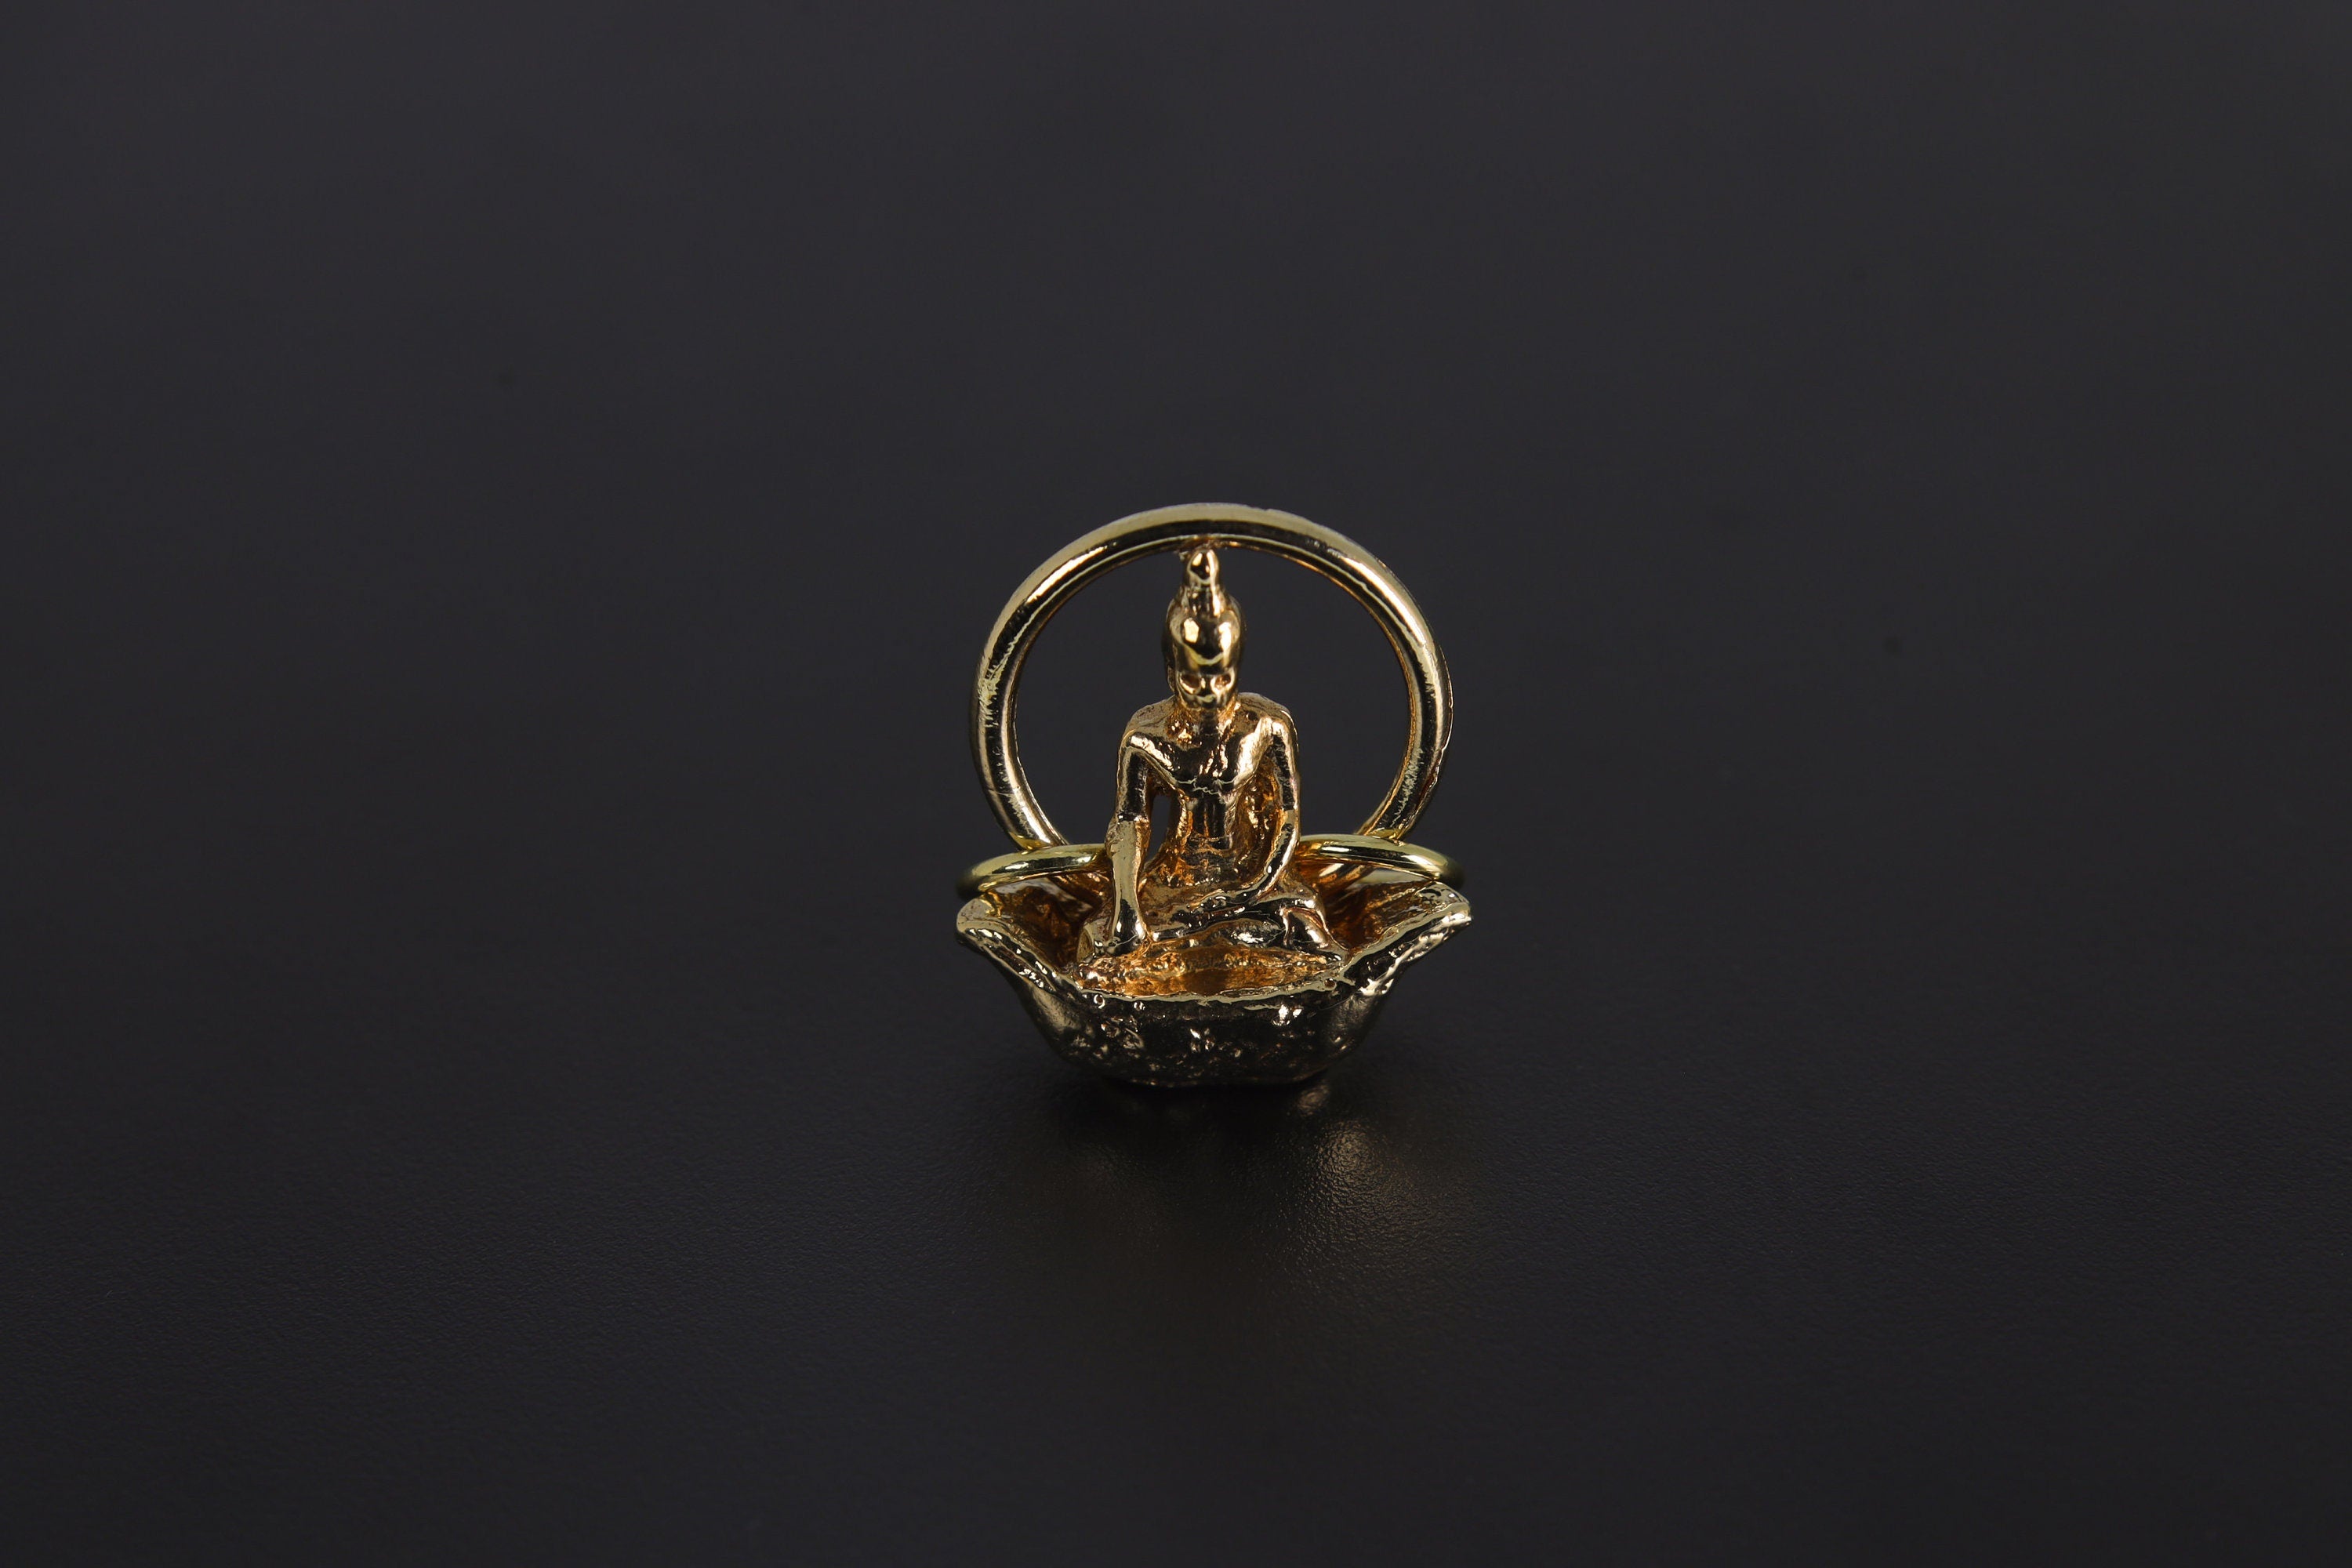 Cast Pendant with Buddha Sitting on Boat Talisman, Gold Plated Brass Charm, Inner Peace & Prosperity, Buddhist Spiritual Jewelry